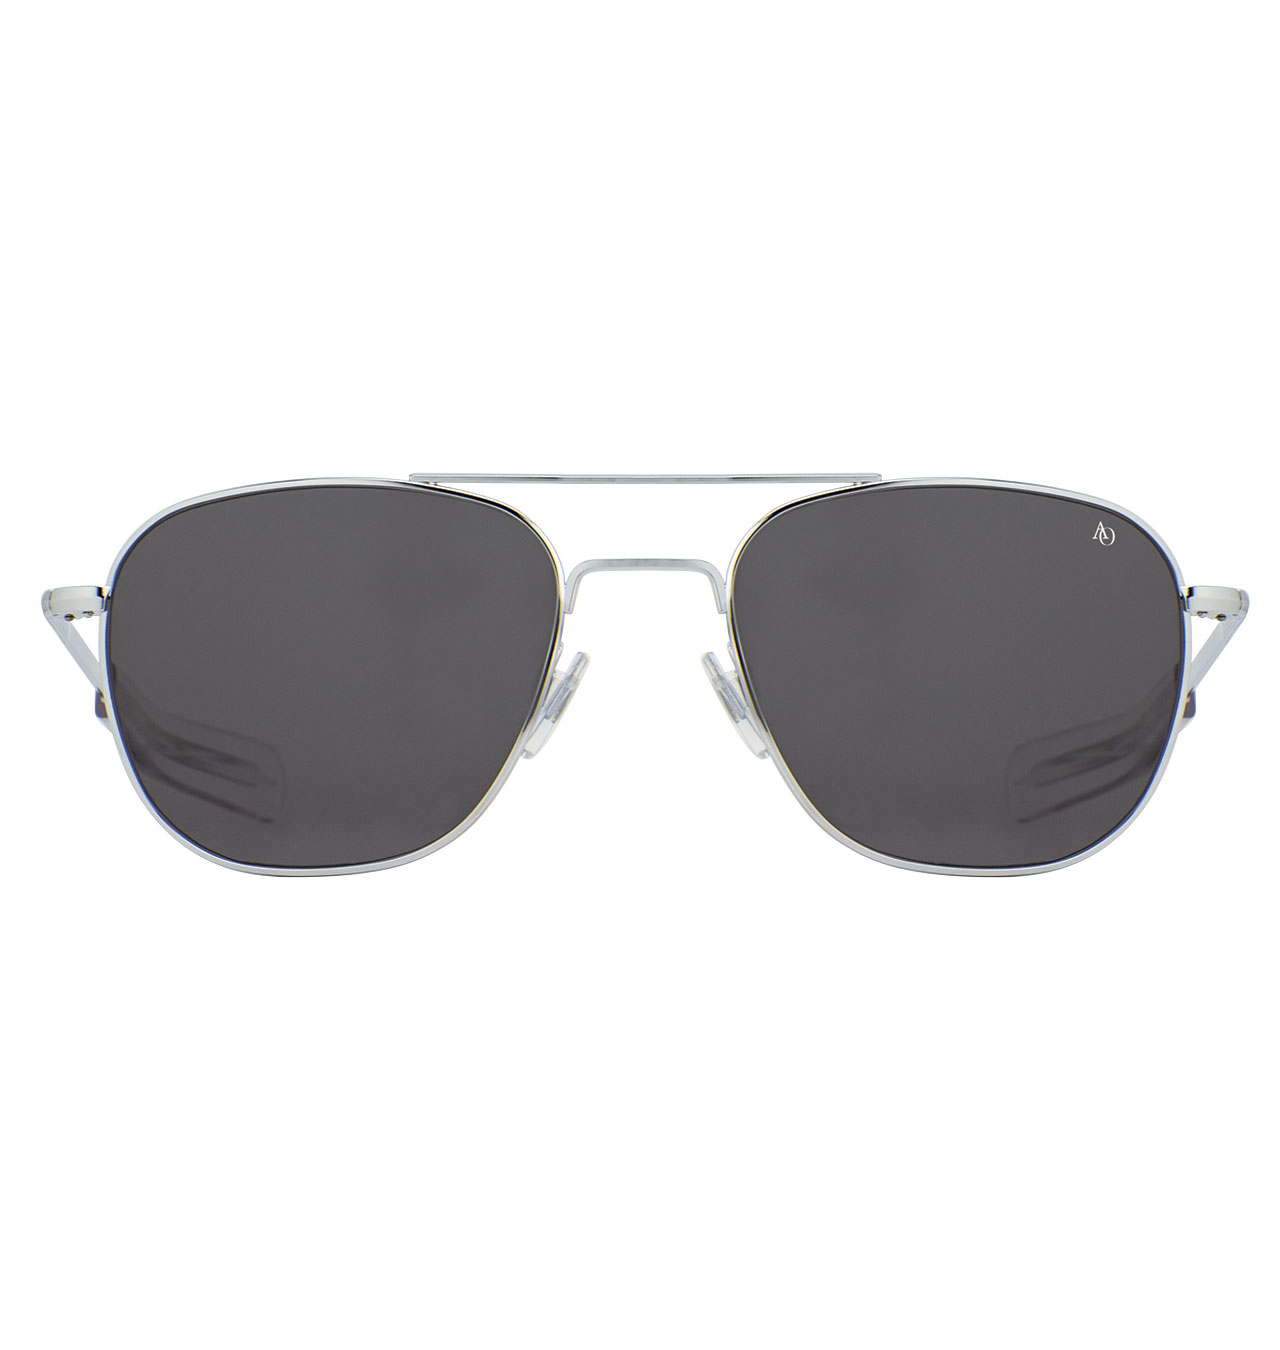 American Optical - Original Pilot Sunglasses Polarized - Silver